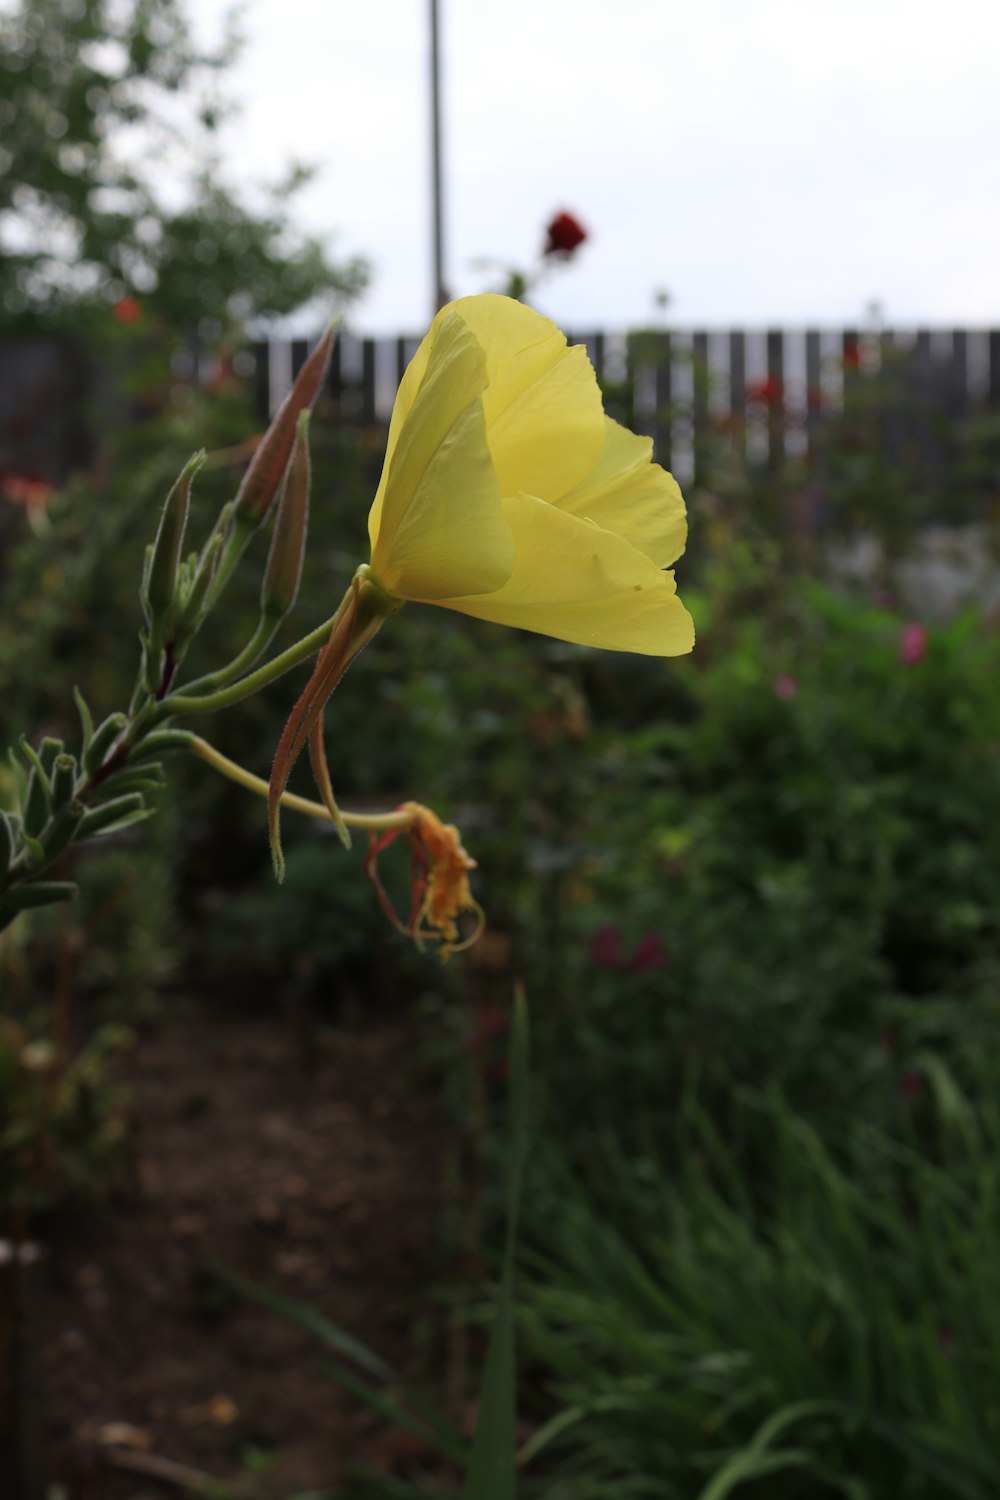 a single yellow flower in a garden